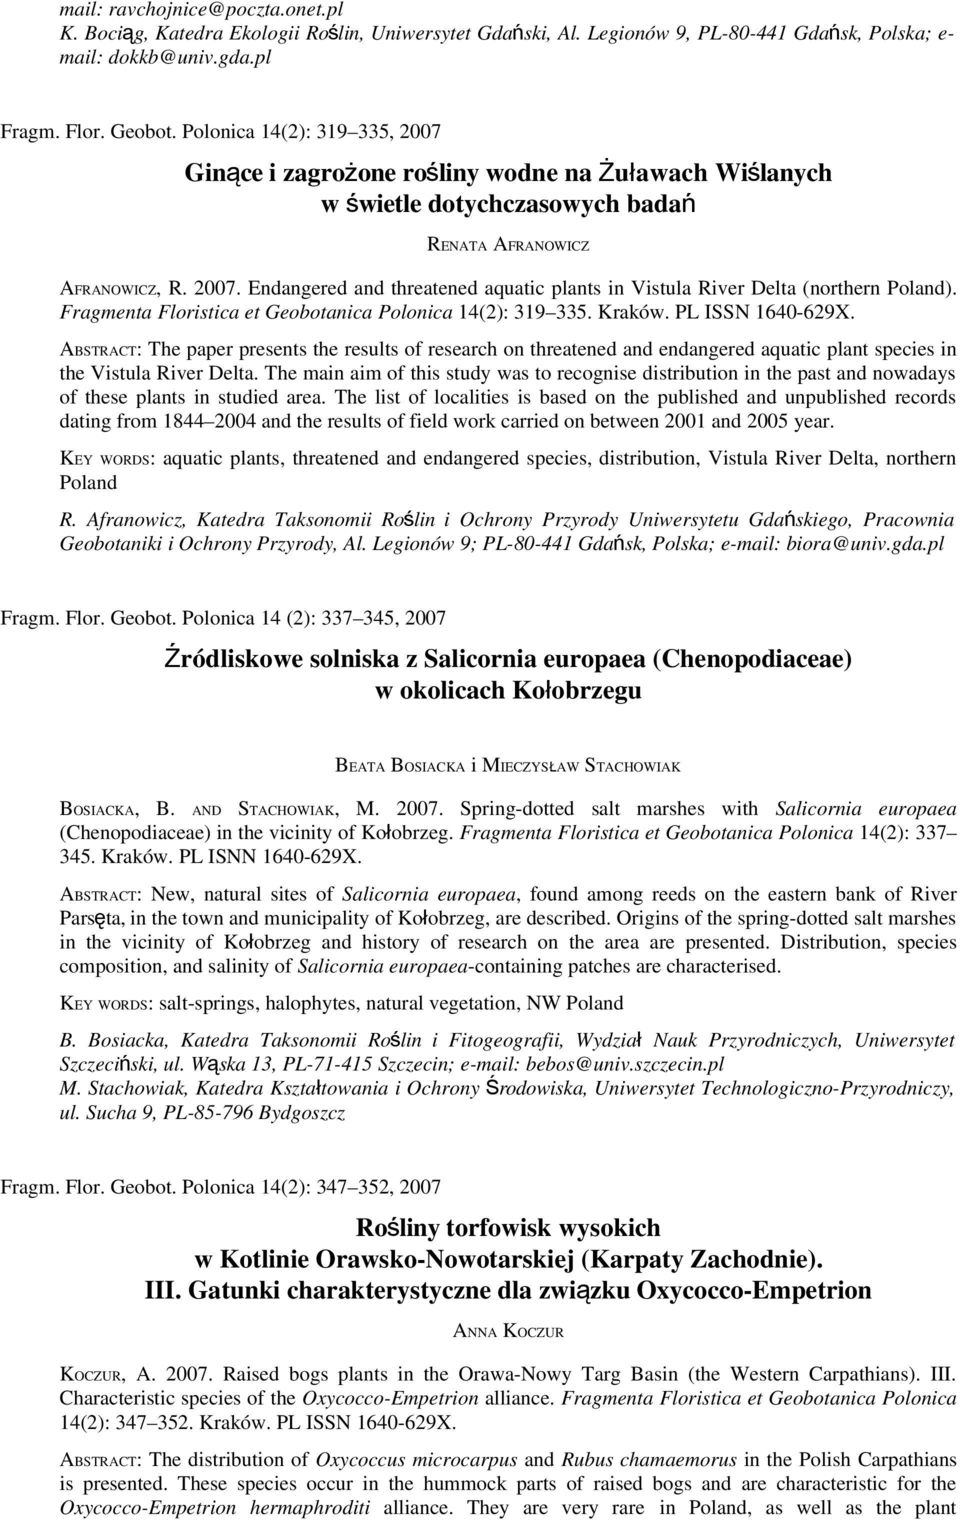 Fragmenta Floristica et Geobotanica Polonica 14(2): 319 335. Kraków. PL ISSN 1640-629X.